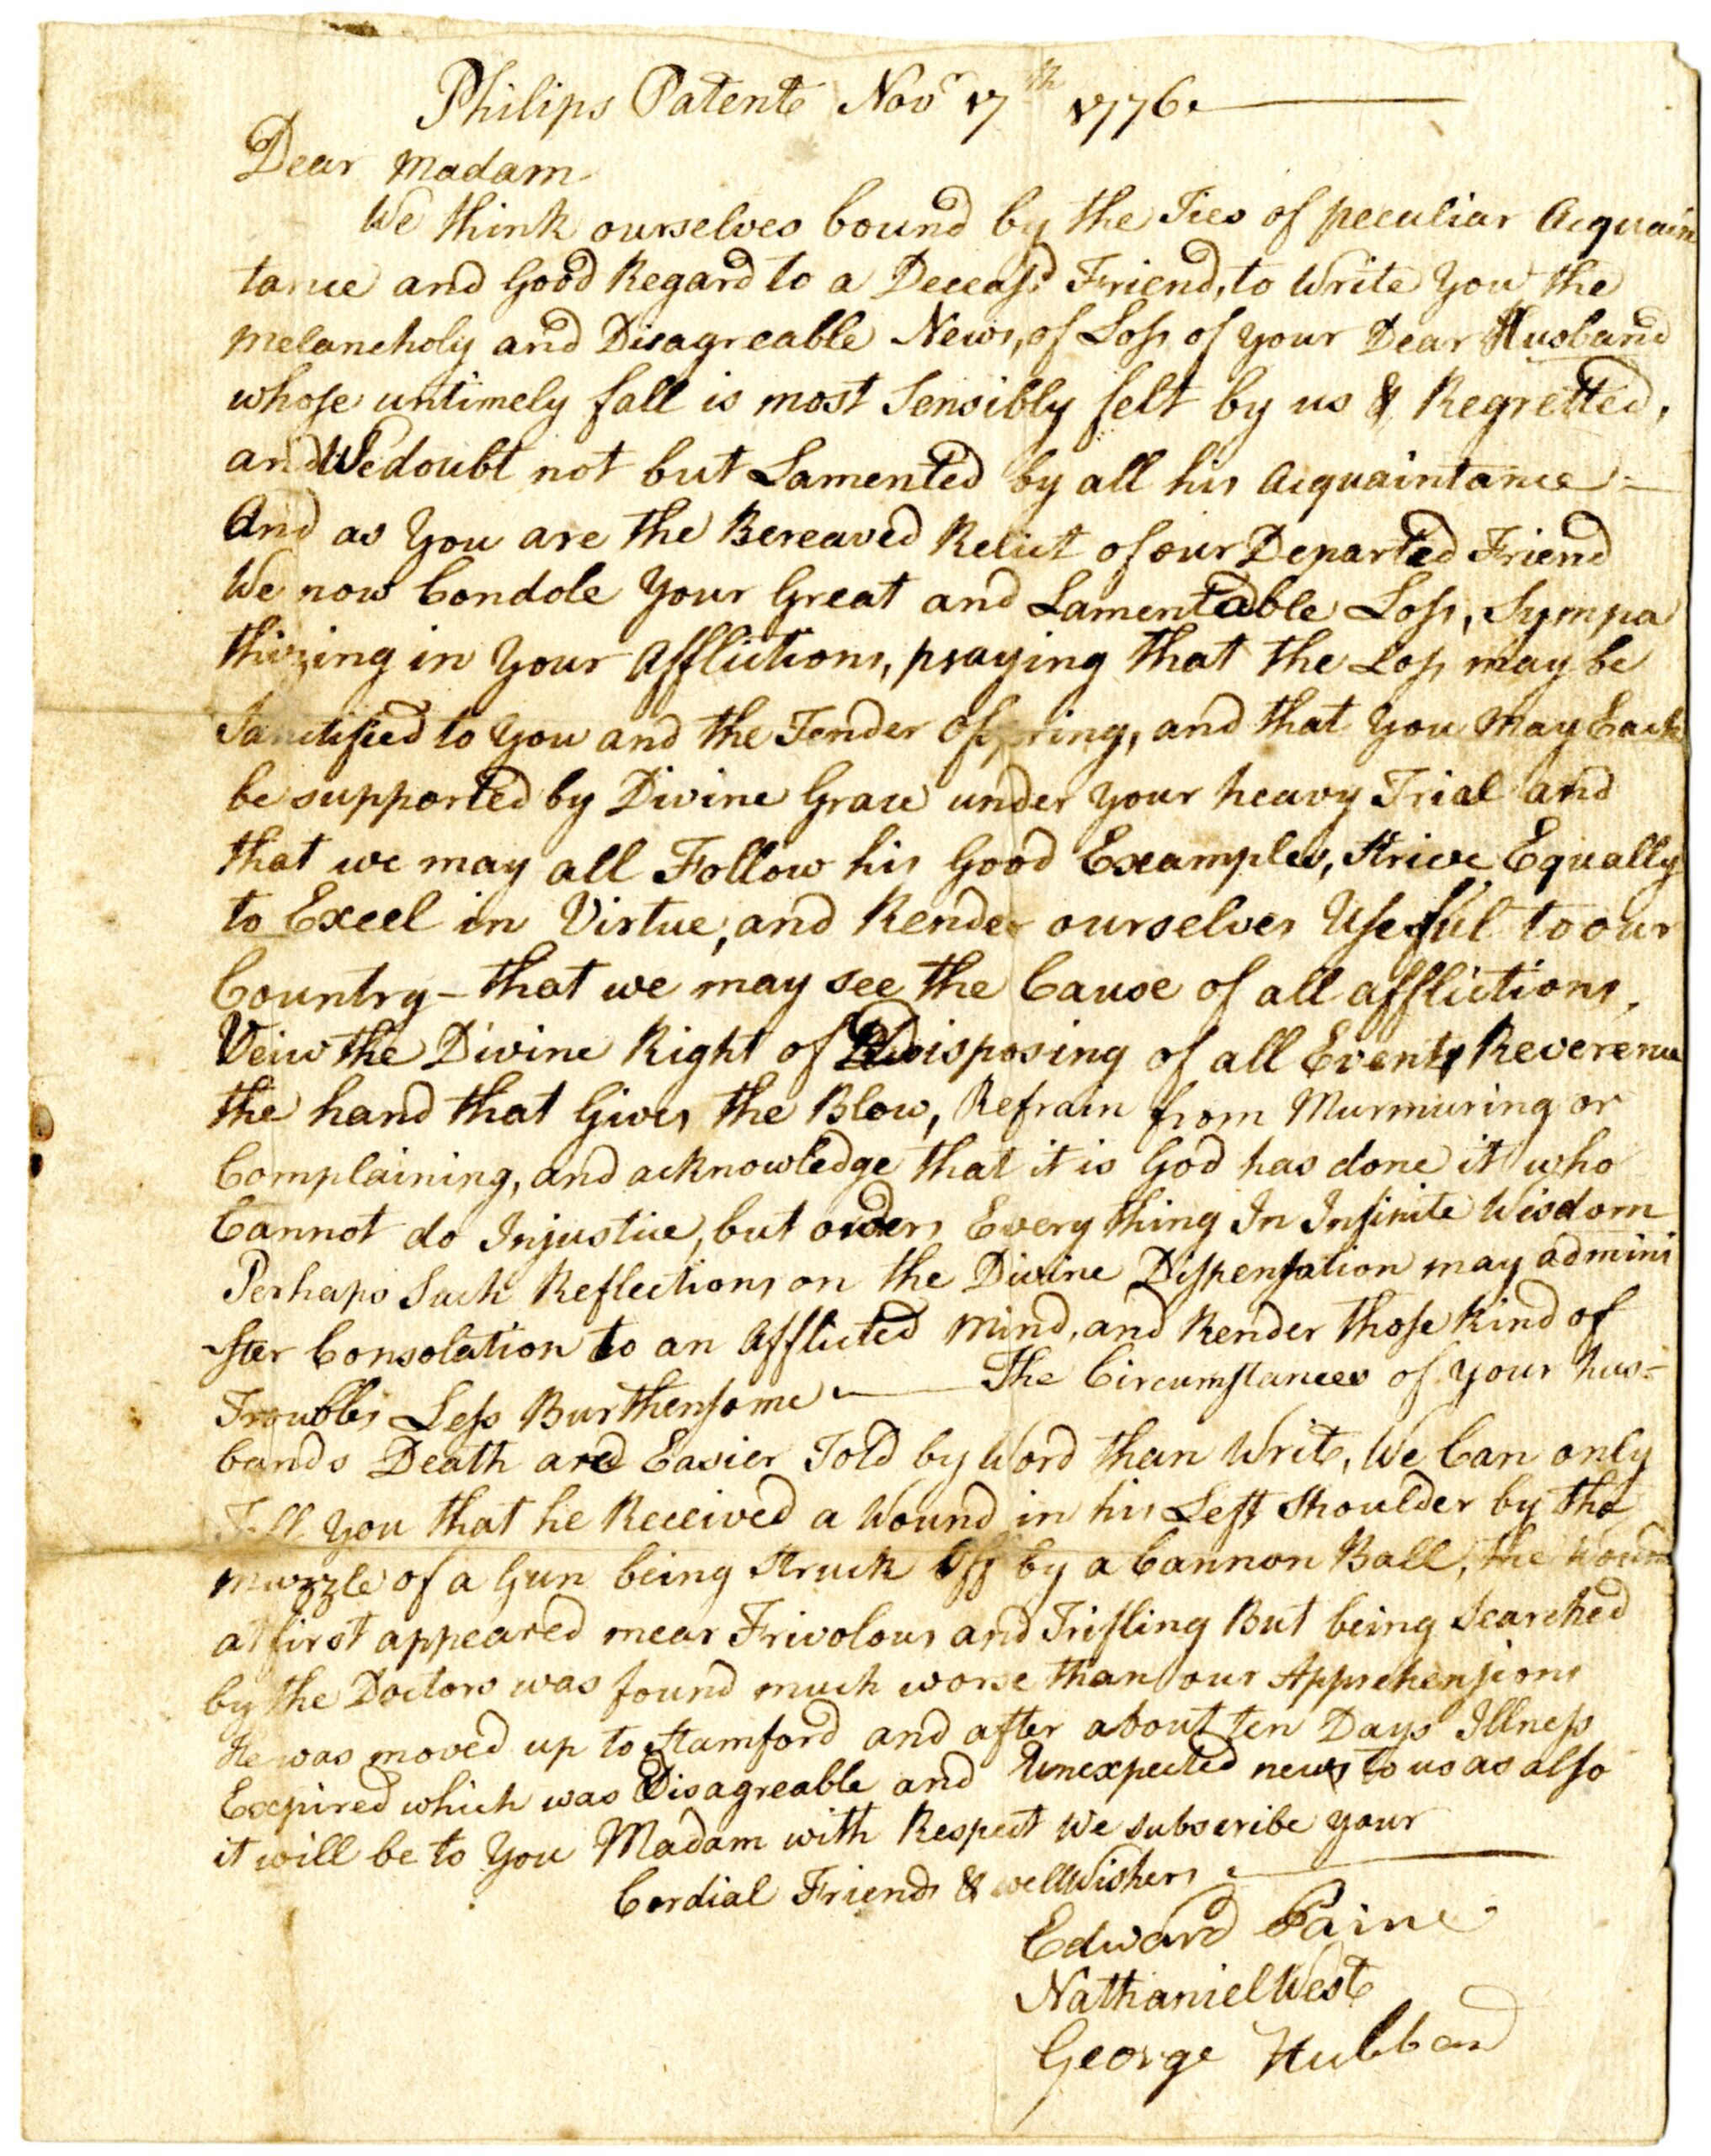 Edward Paine, Nathaniel West and George Hubbard to Priscilla Birge 17 November 1776